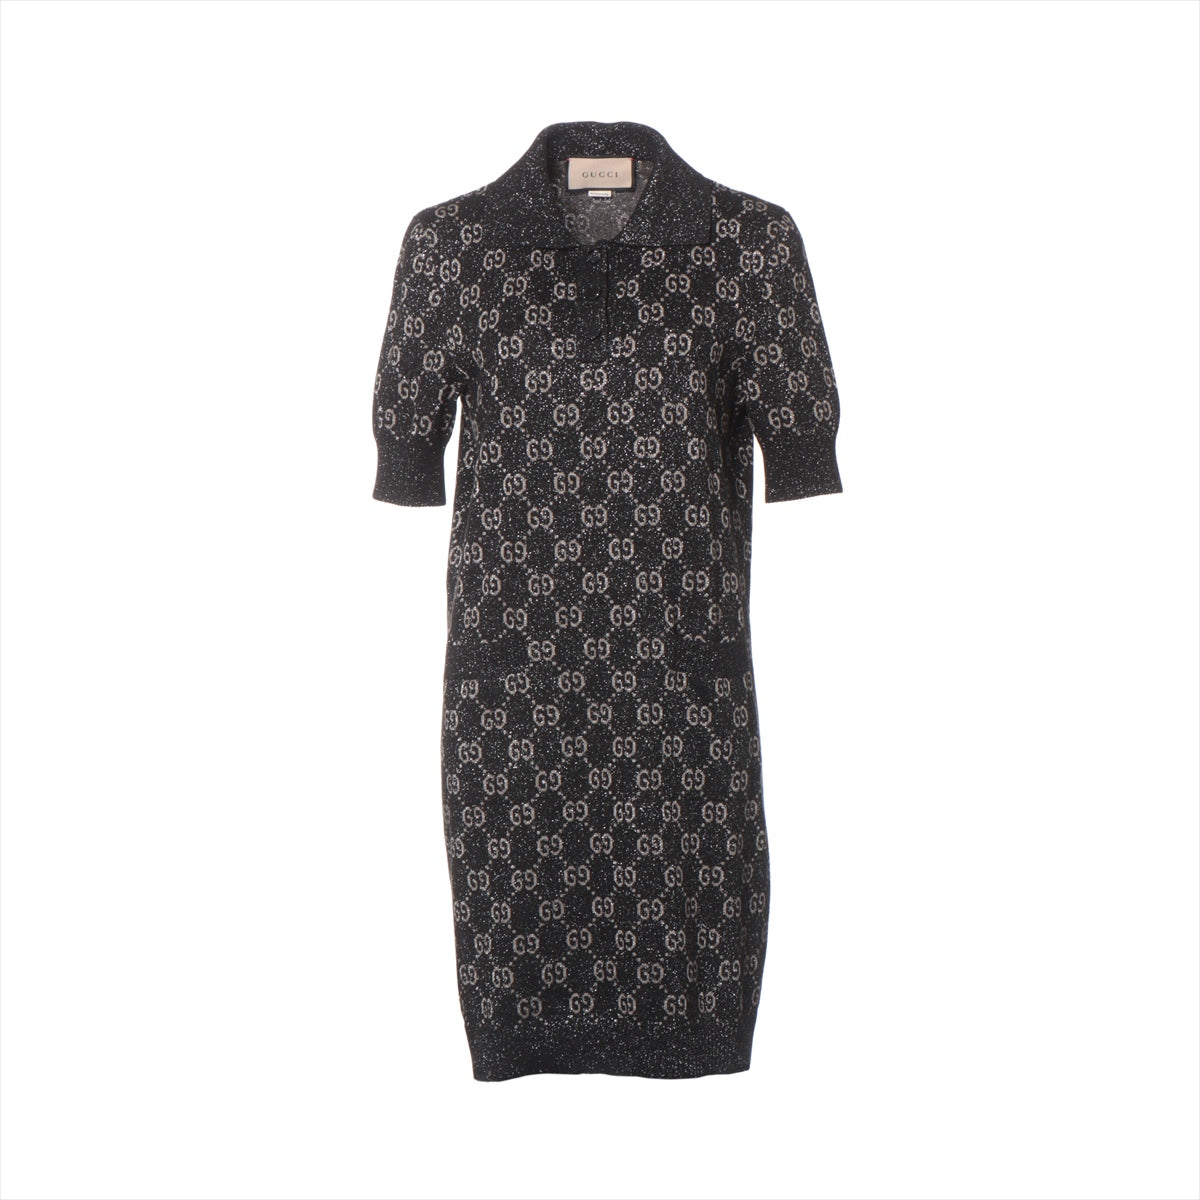 Gucci GG jacquard Cotton & nylon Knit dress M Ladies' Black×Gold  678437 Glitter Polo shirt